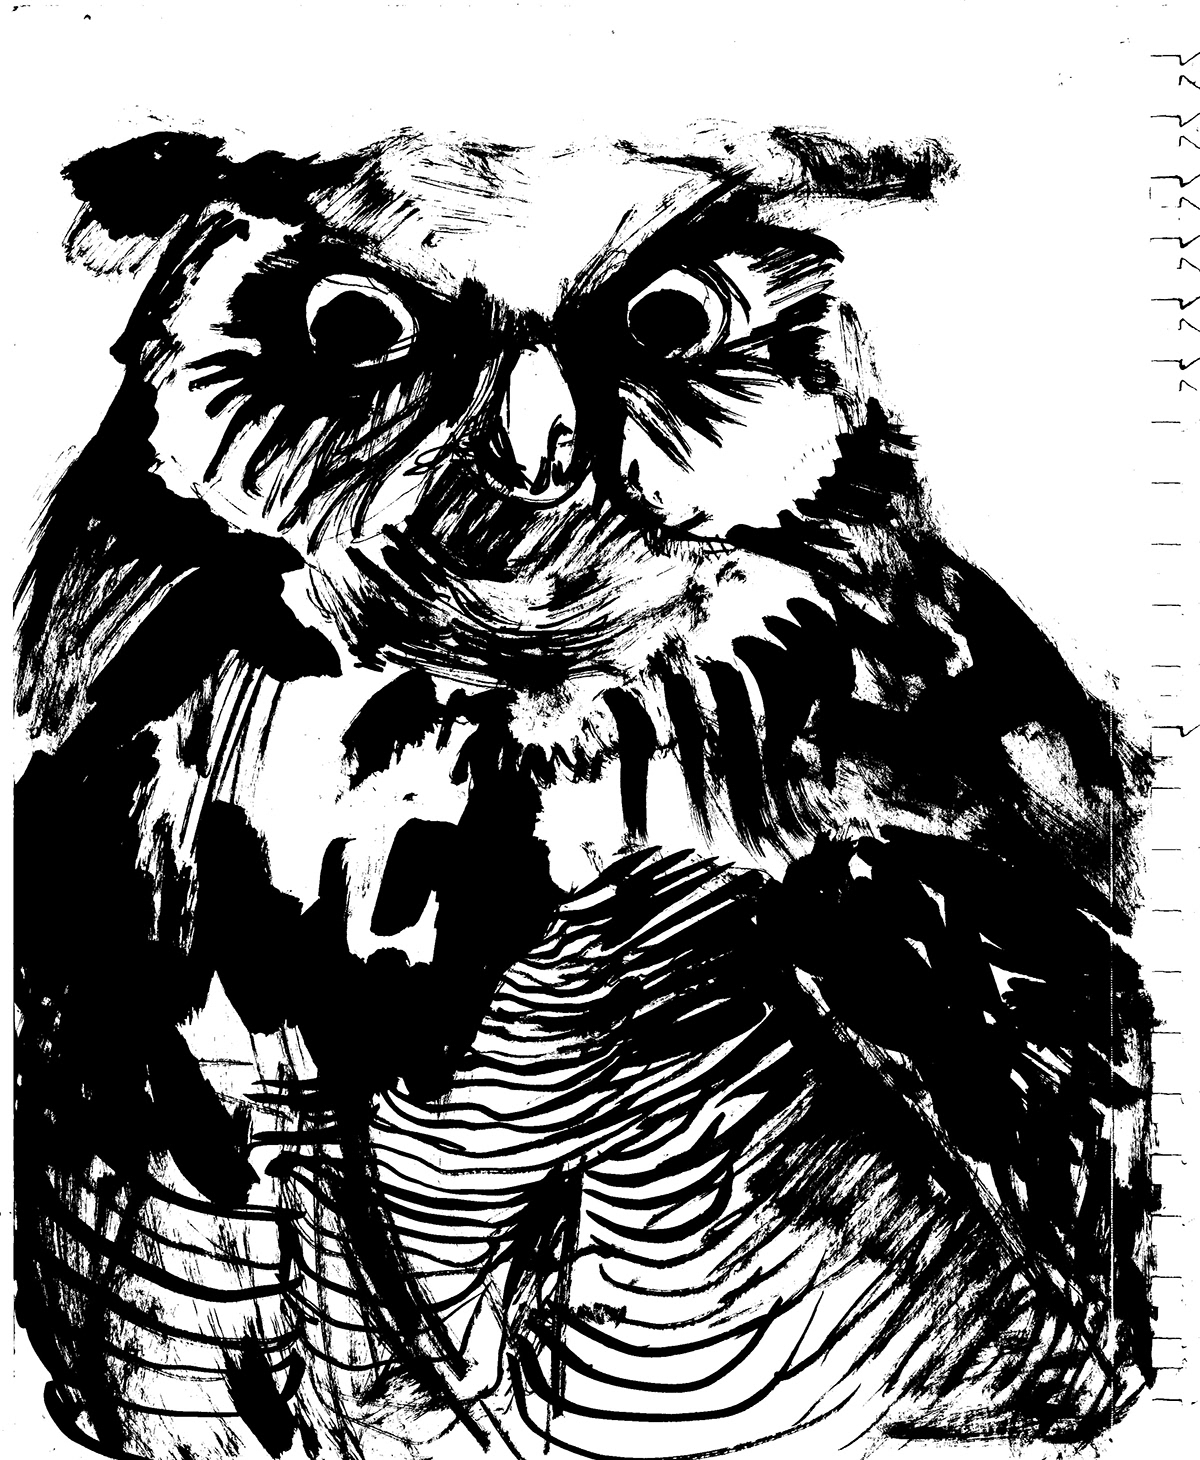 ink ink nib observational drawing art Visual Development owls birds animals narrative portrait wildlife stuffed